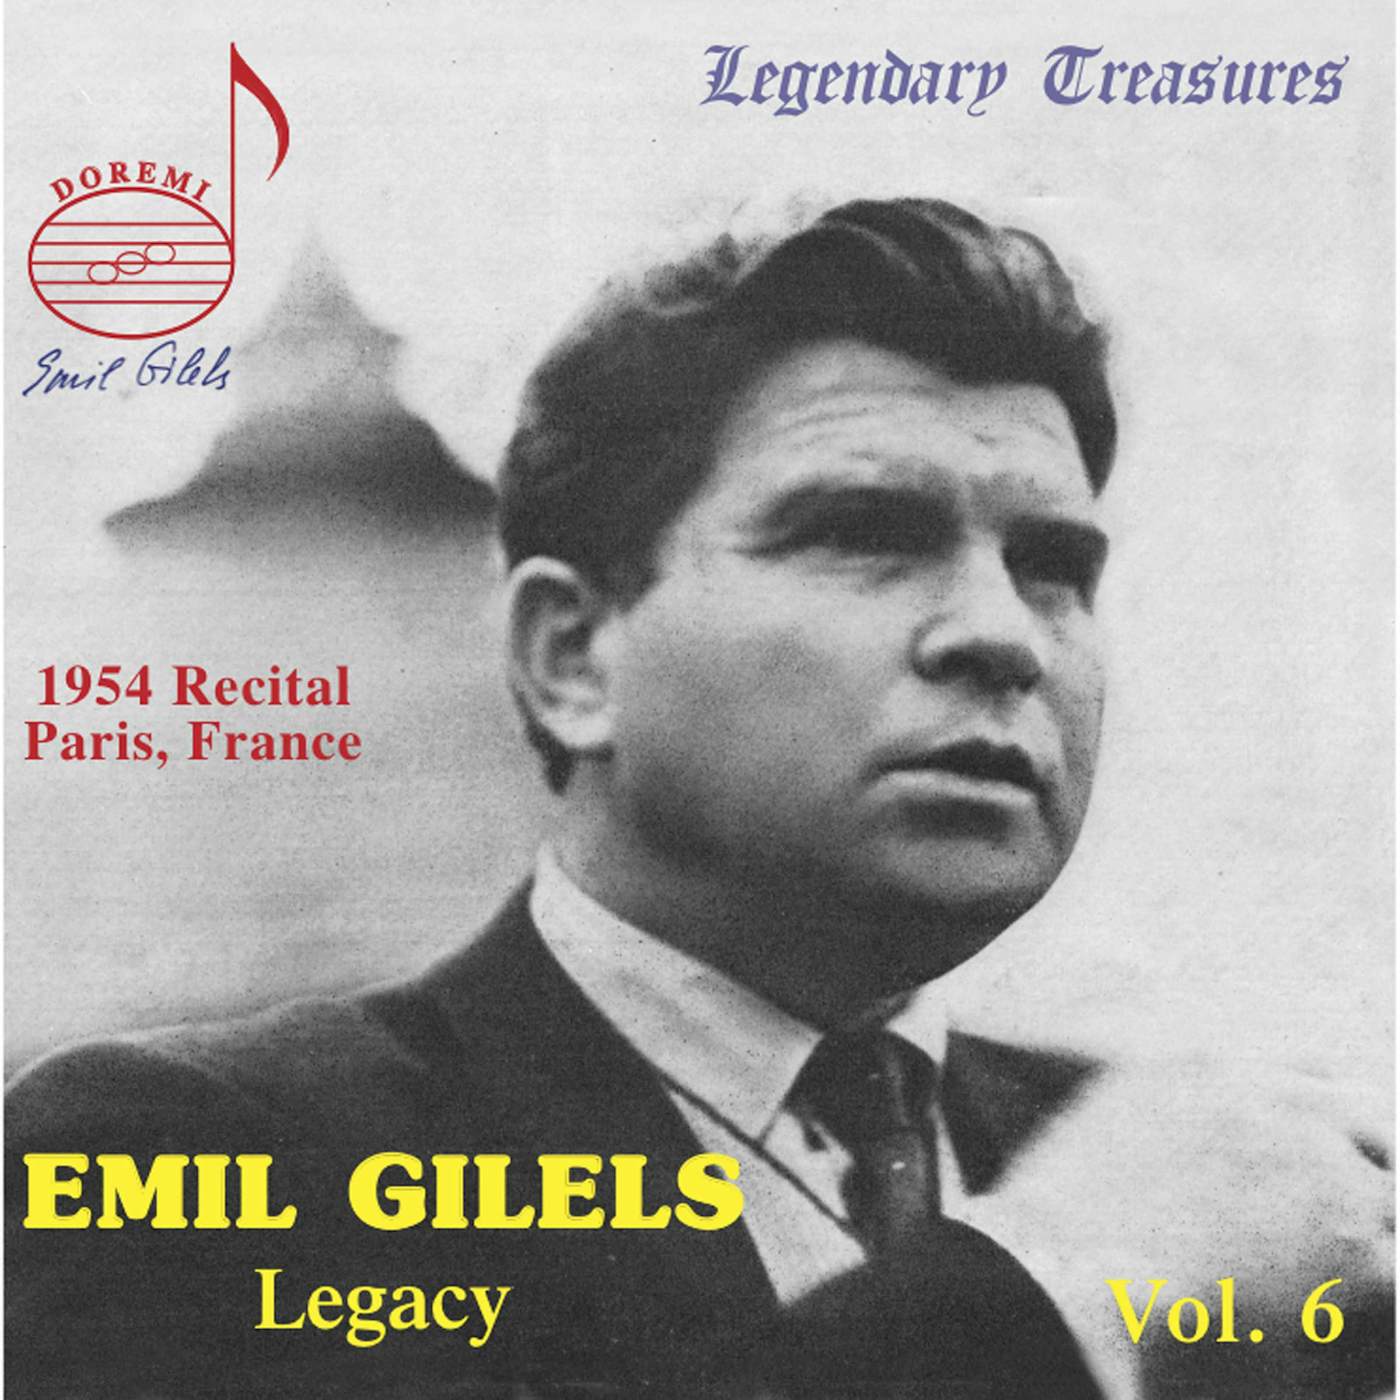 Emil Gilels LEGACY 6 CD